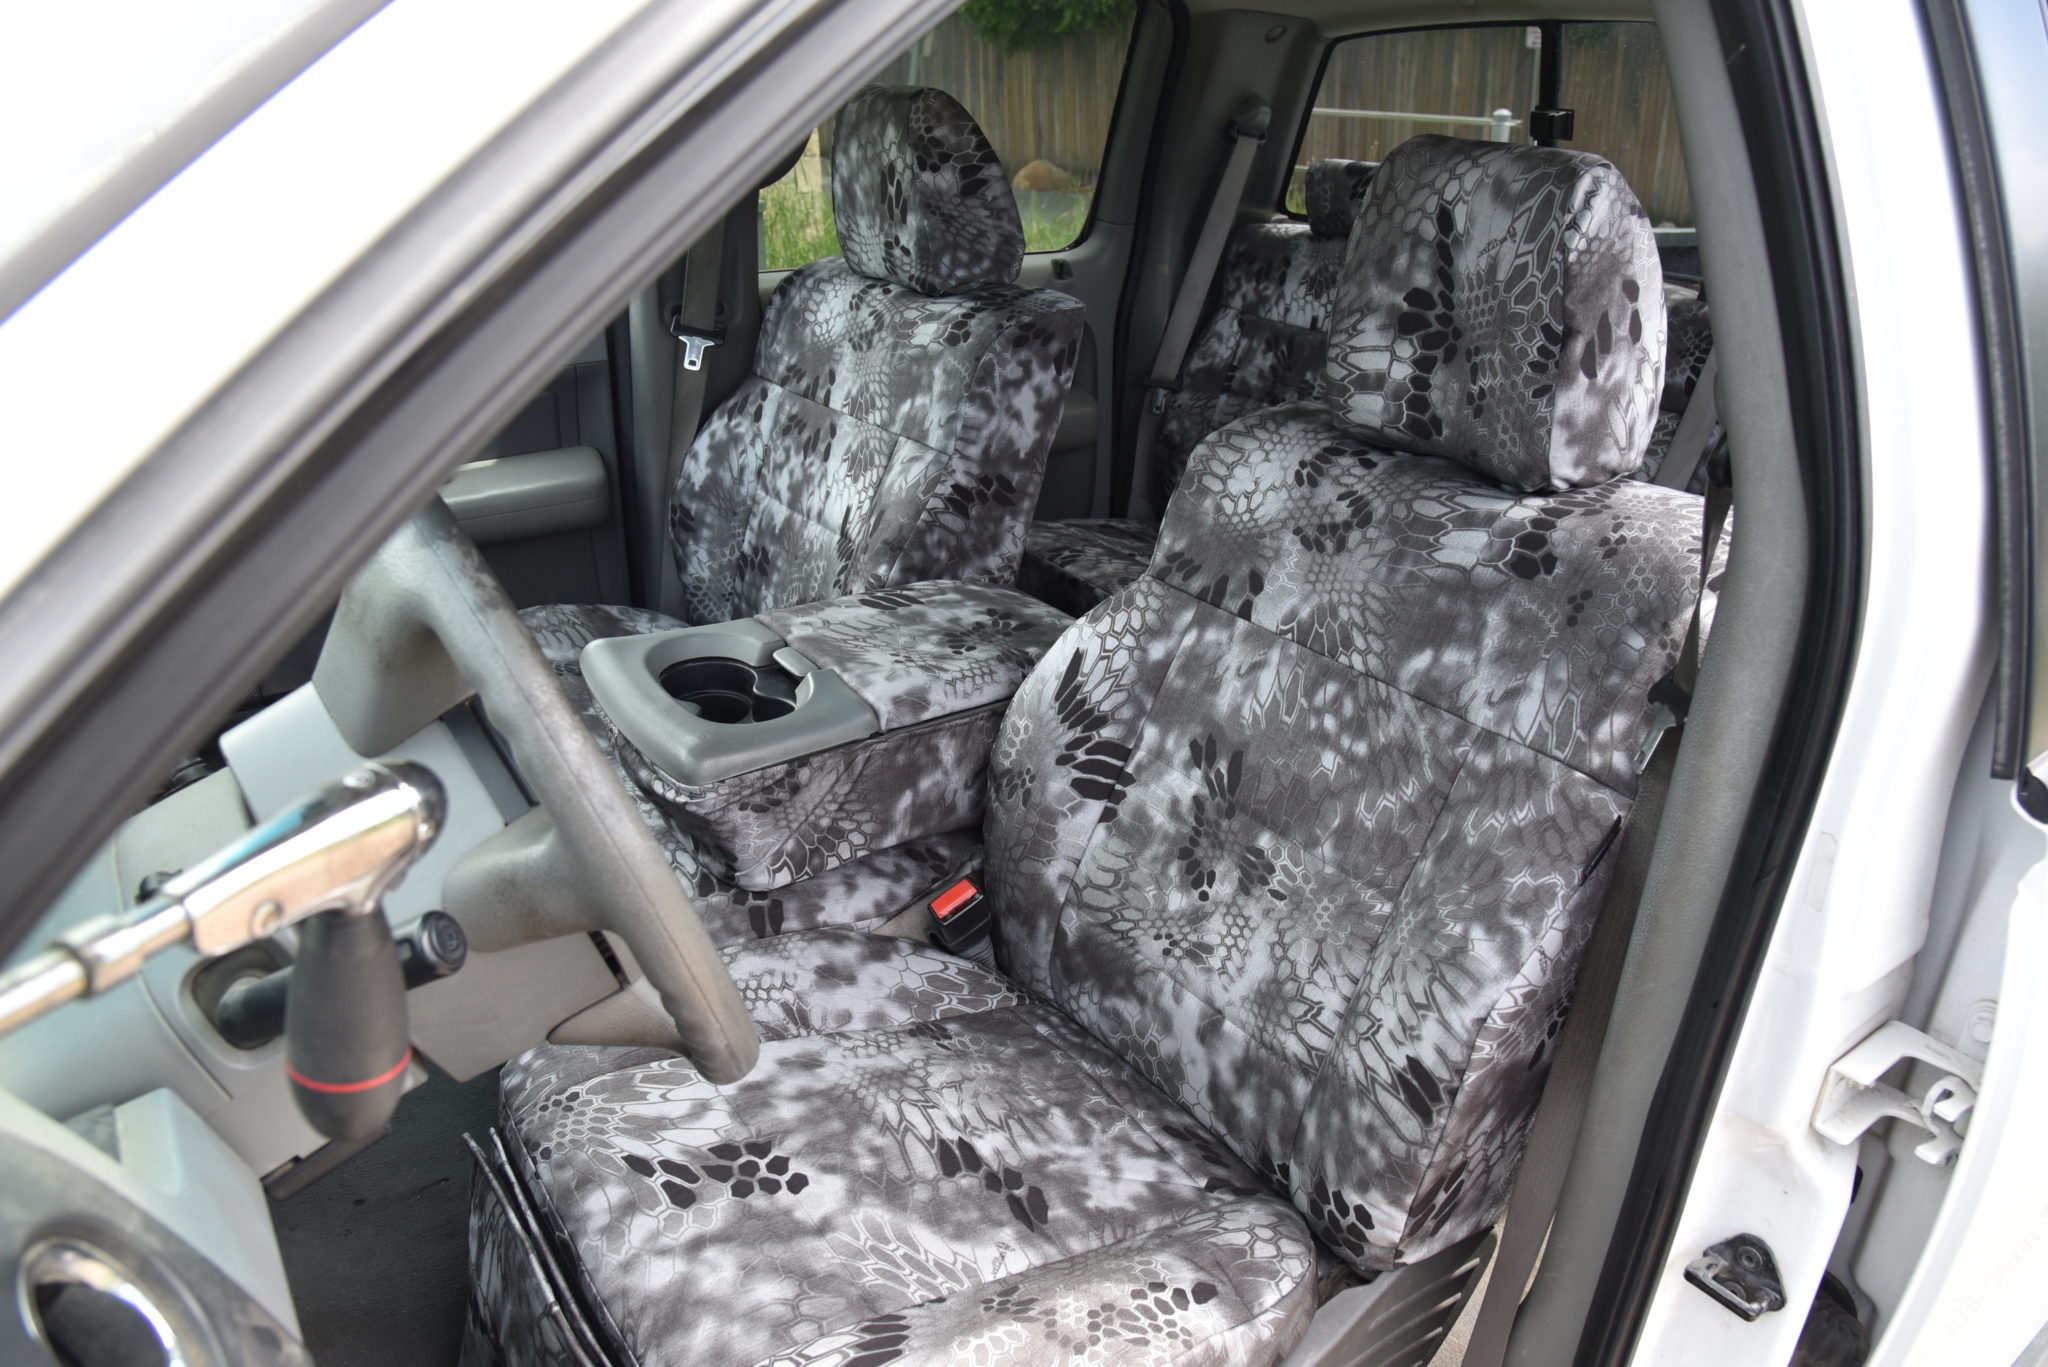 Kryptek Raid Camo Seat Cover